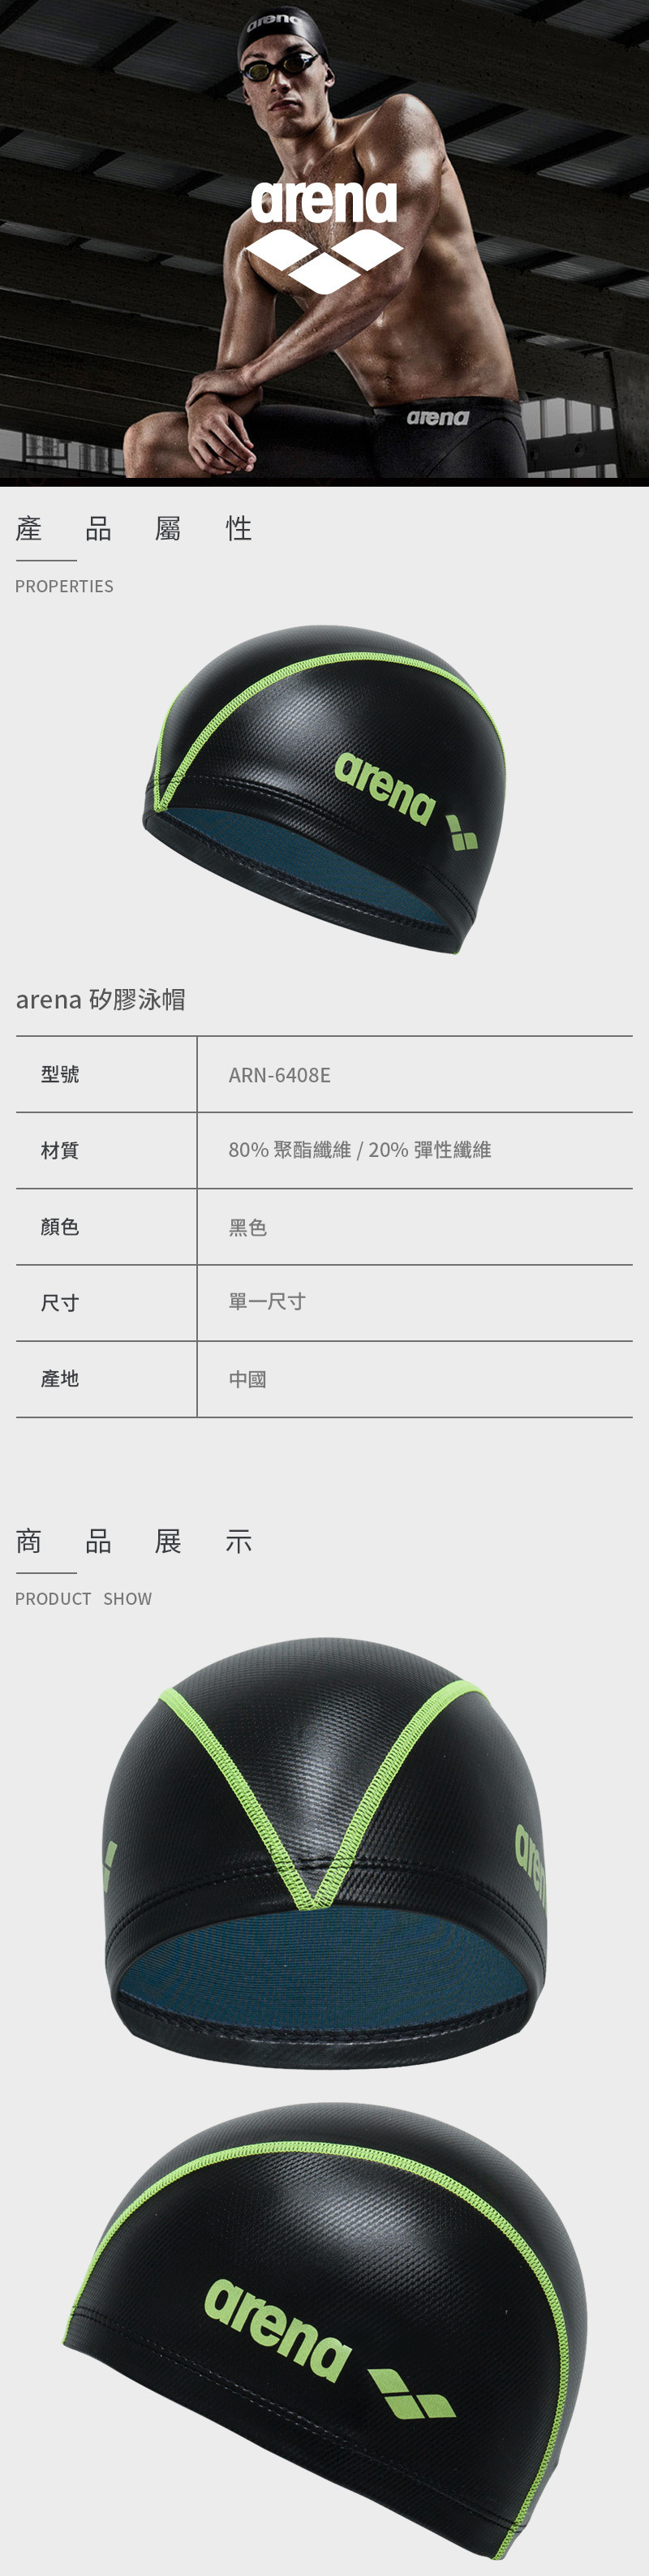 【arena】二合一泳帽 ARN-6408E